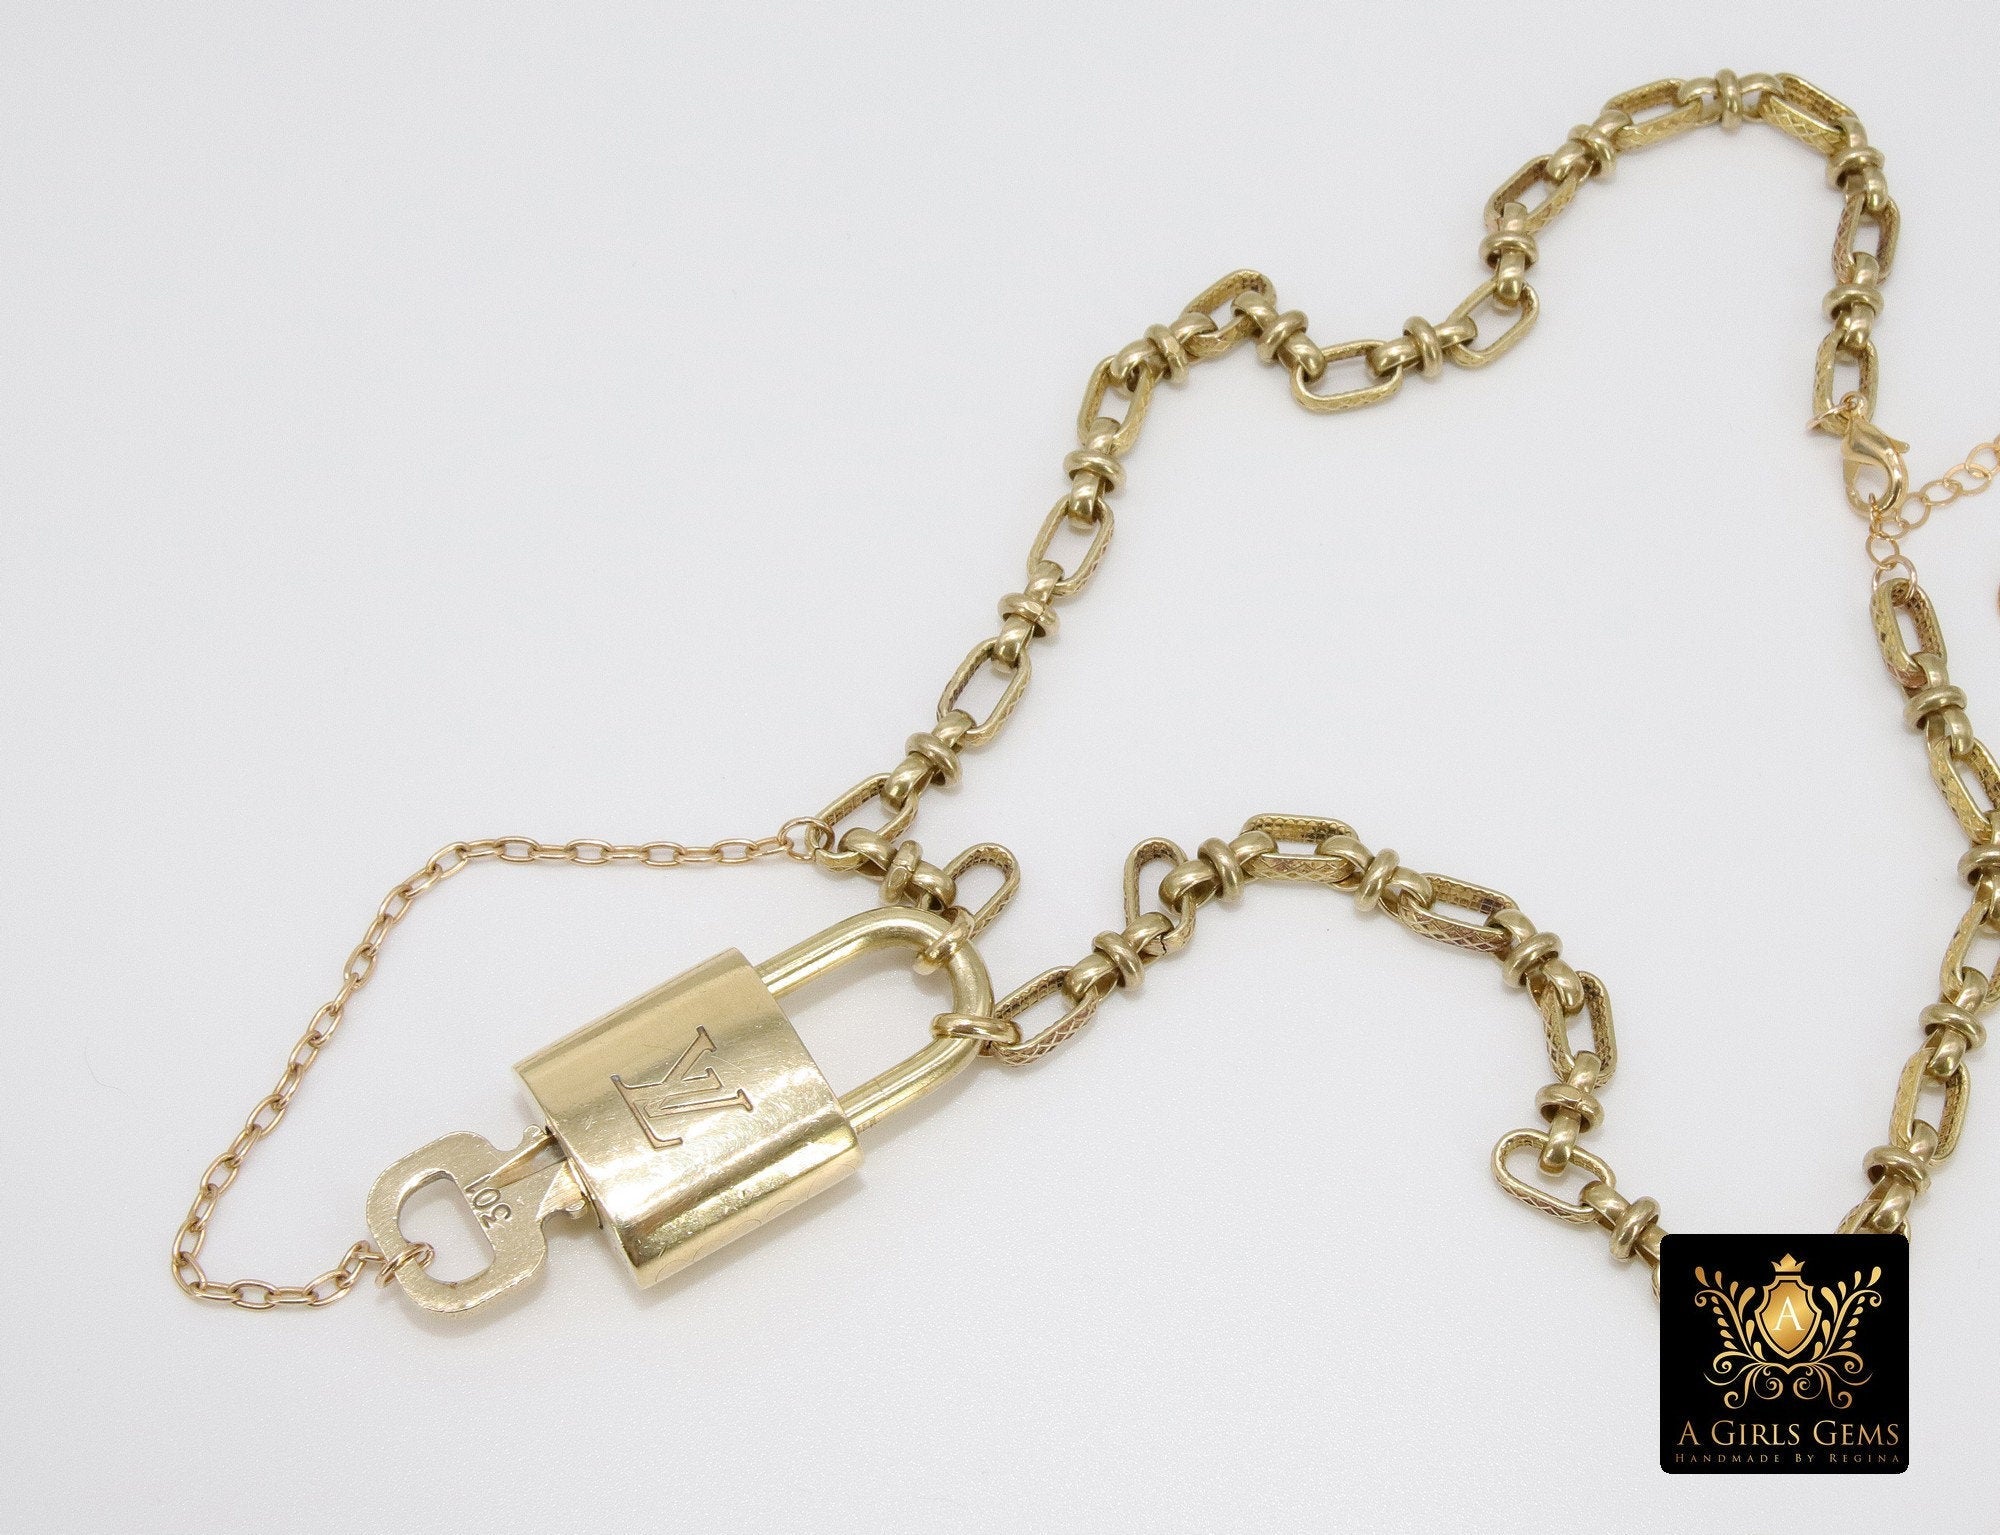 Repurposed vintage brass Louis Vuitton padlock 311 with layered